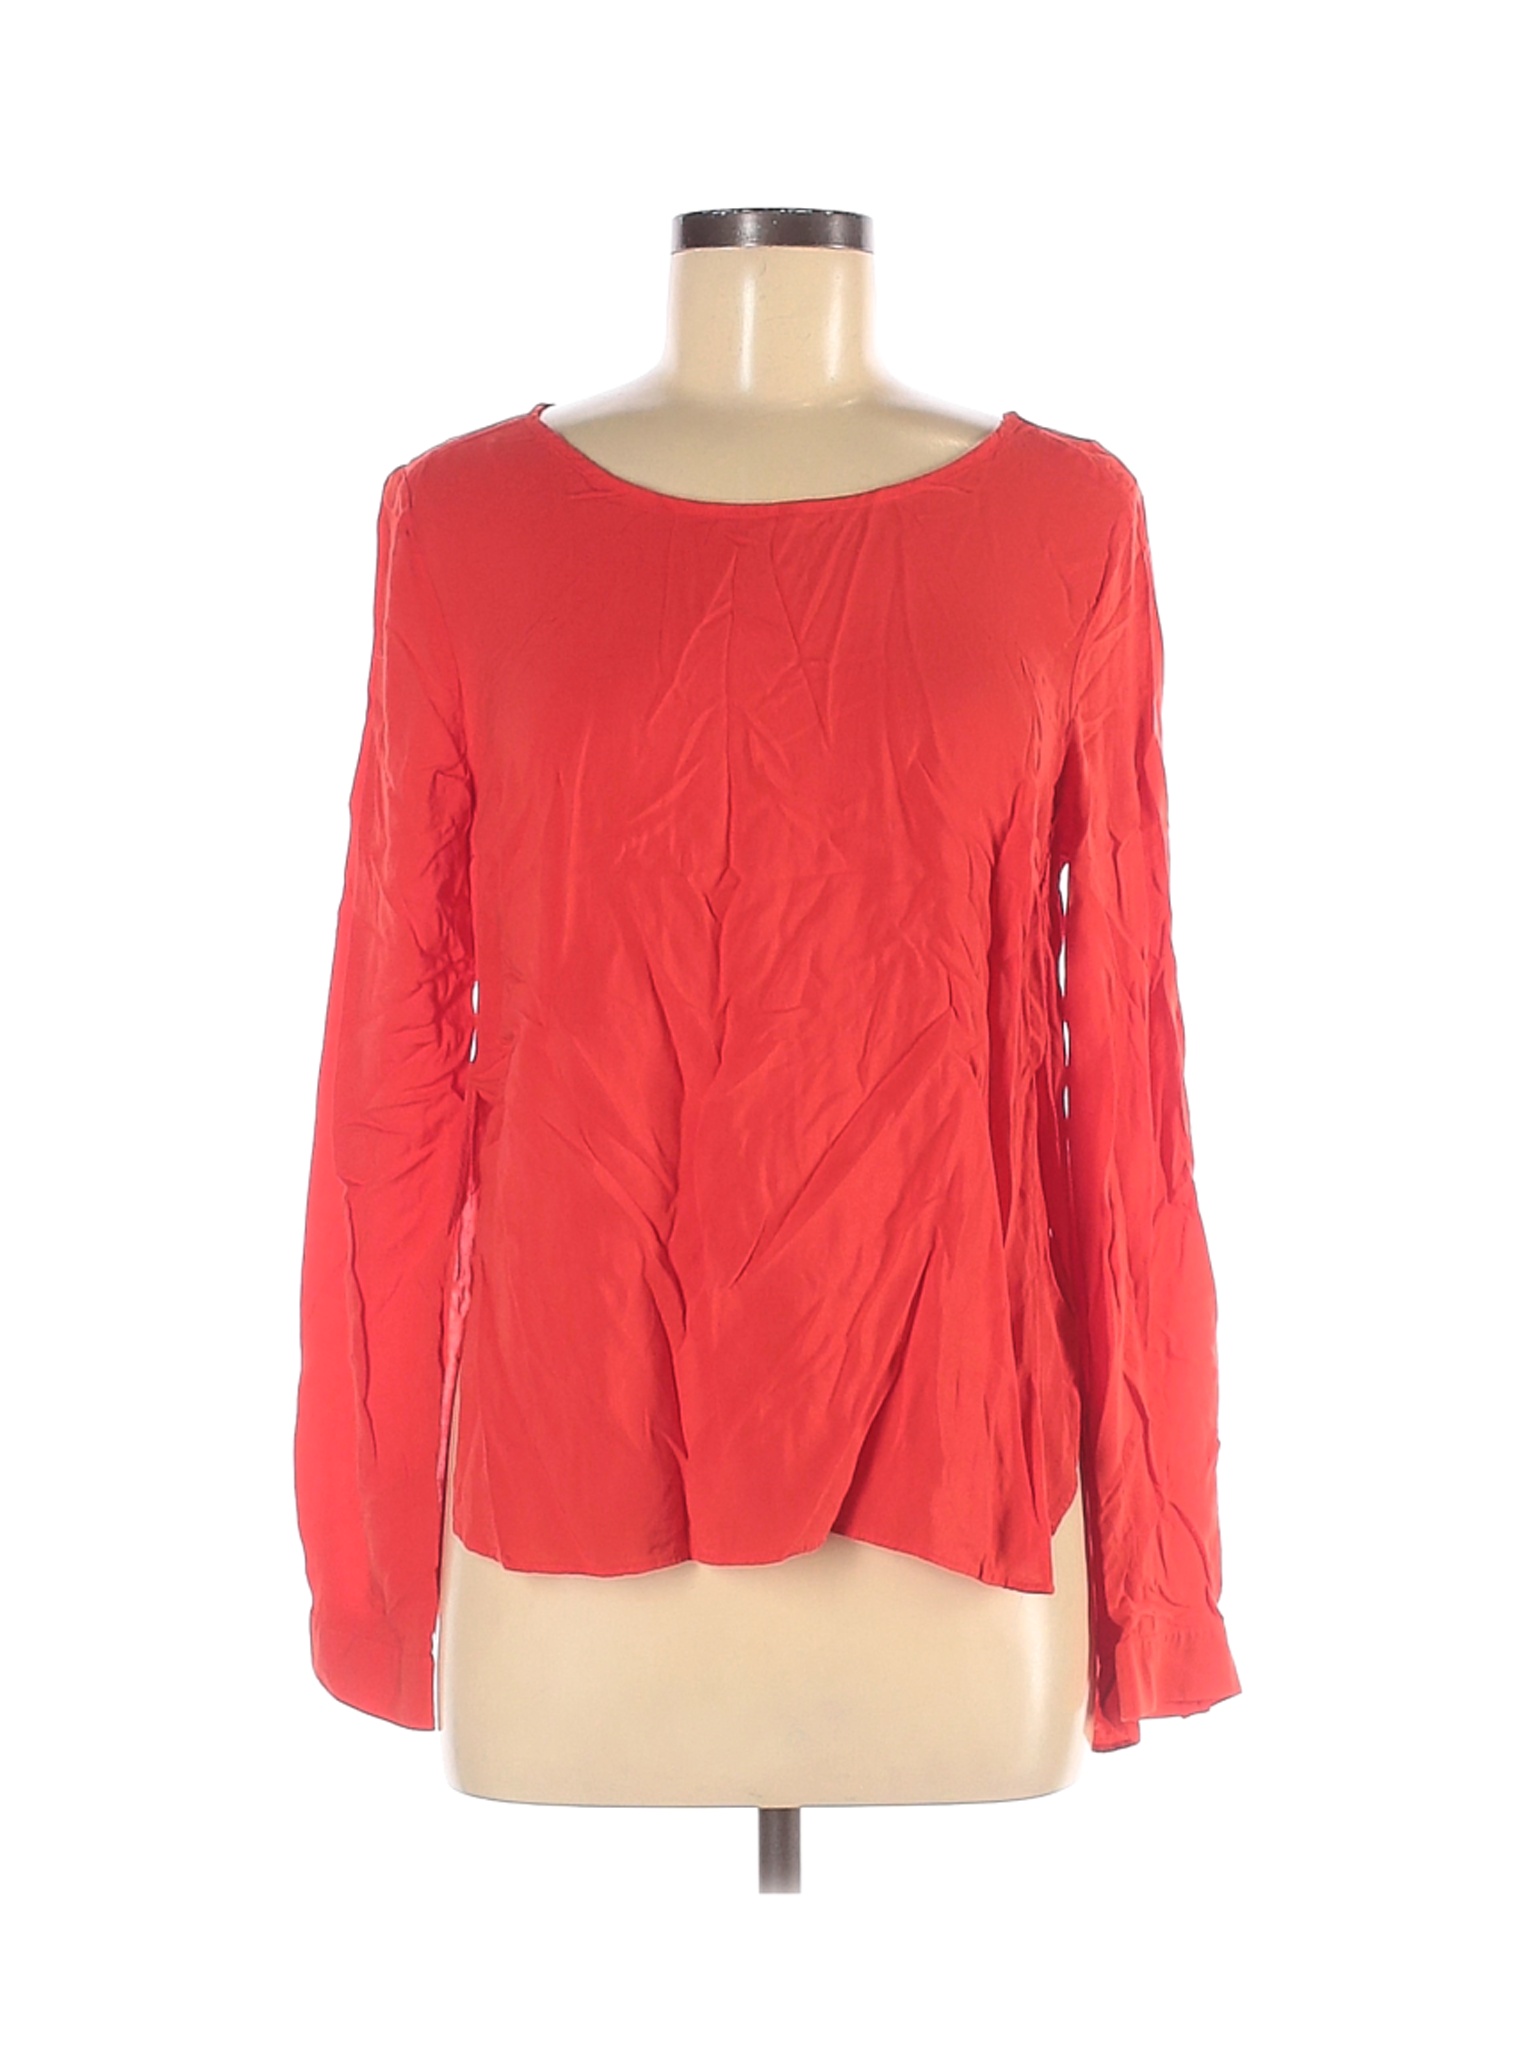 Old Navy Women Red Long Sleeve Blouse M | eBay